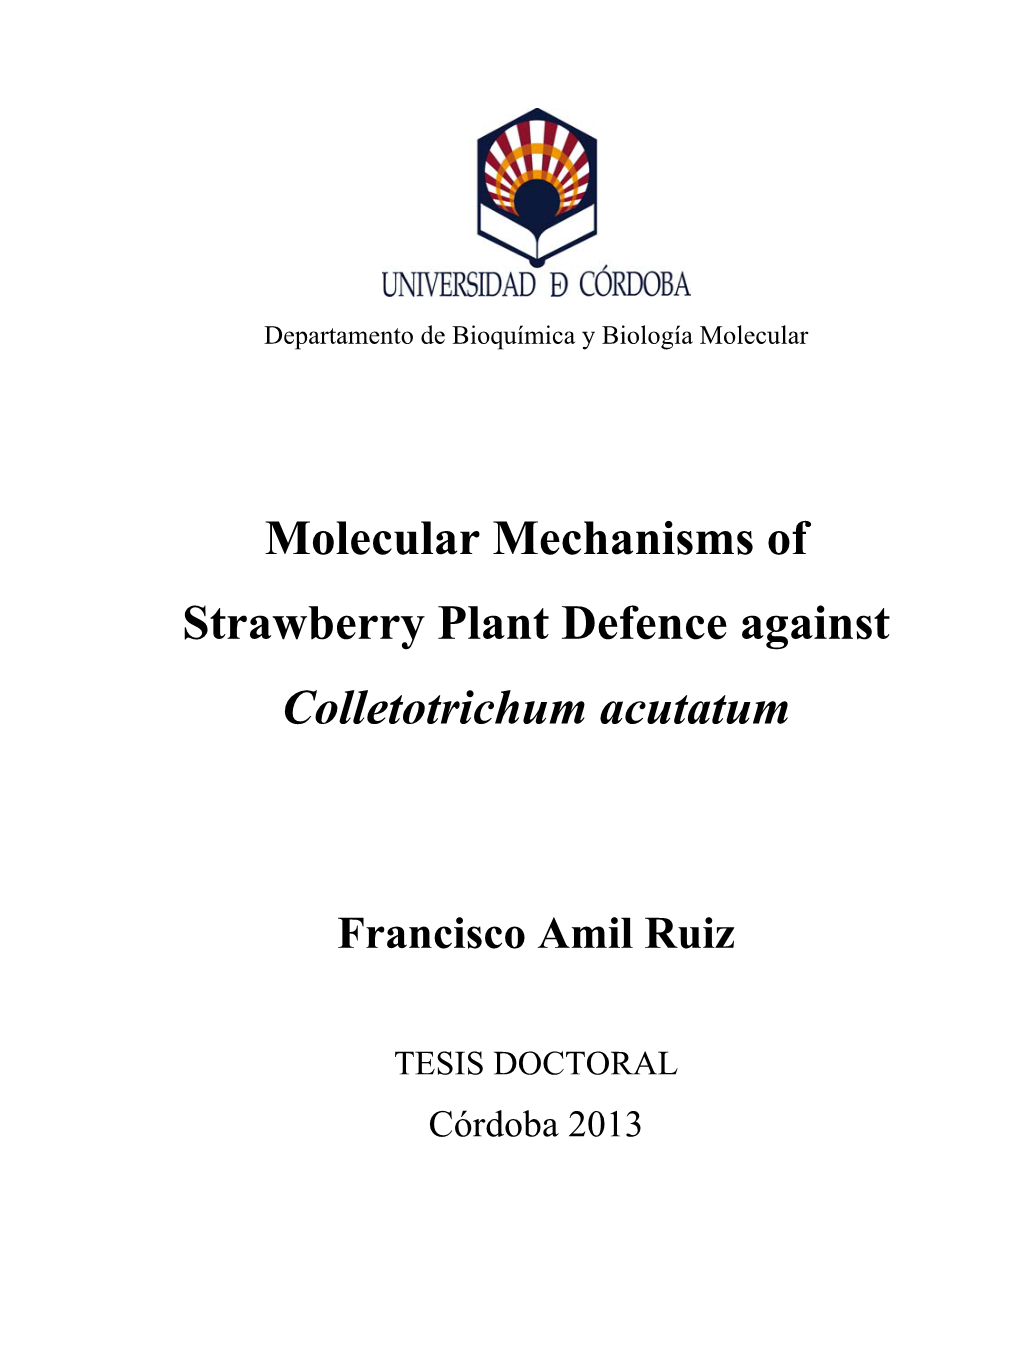 Molecular Mechanisms of Strawberry Plant Defence Against Colletotrichum Acutatum